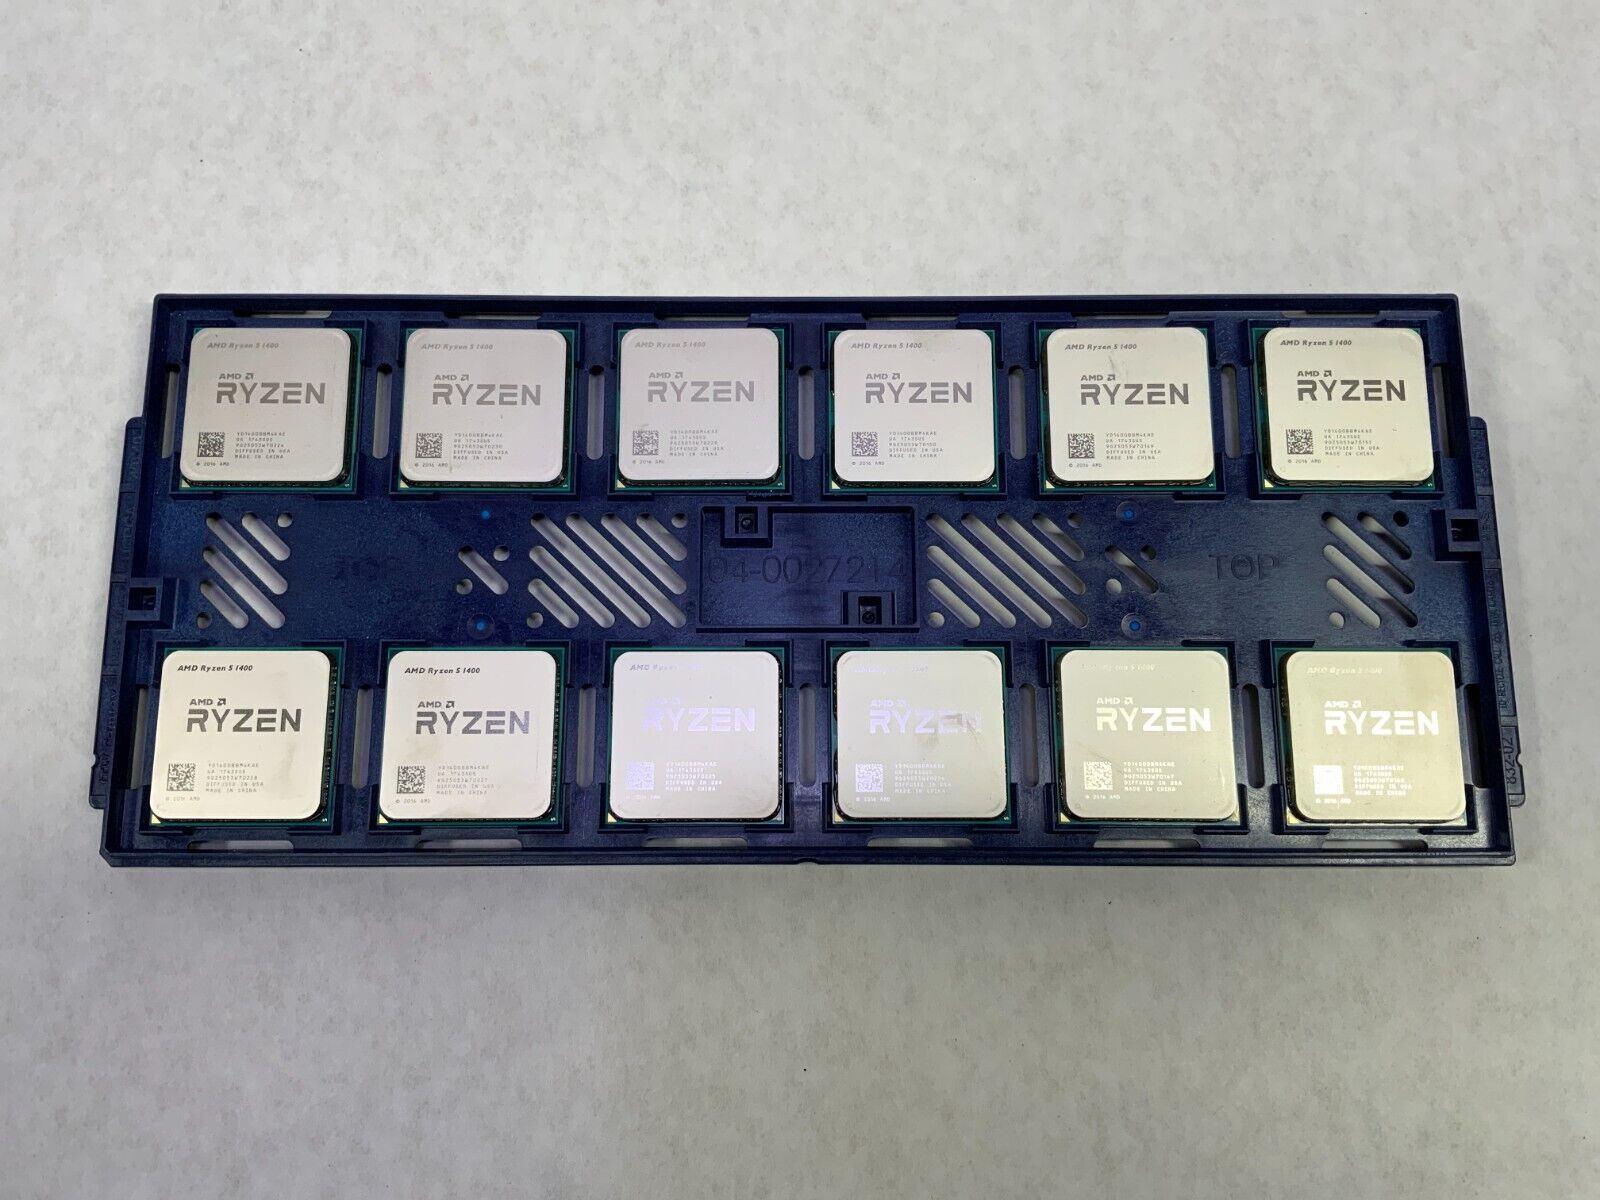 Lot of 12 - AMD Ryzen 5 1400 AM4 CPU Processor R5 1400 Quad Core 8T 3.2GHz 8MB